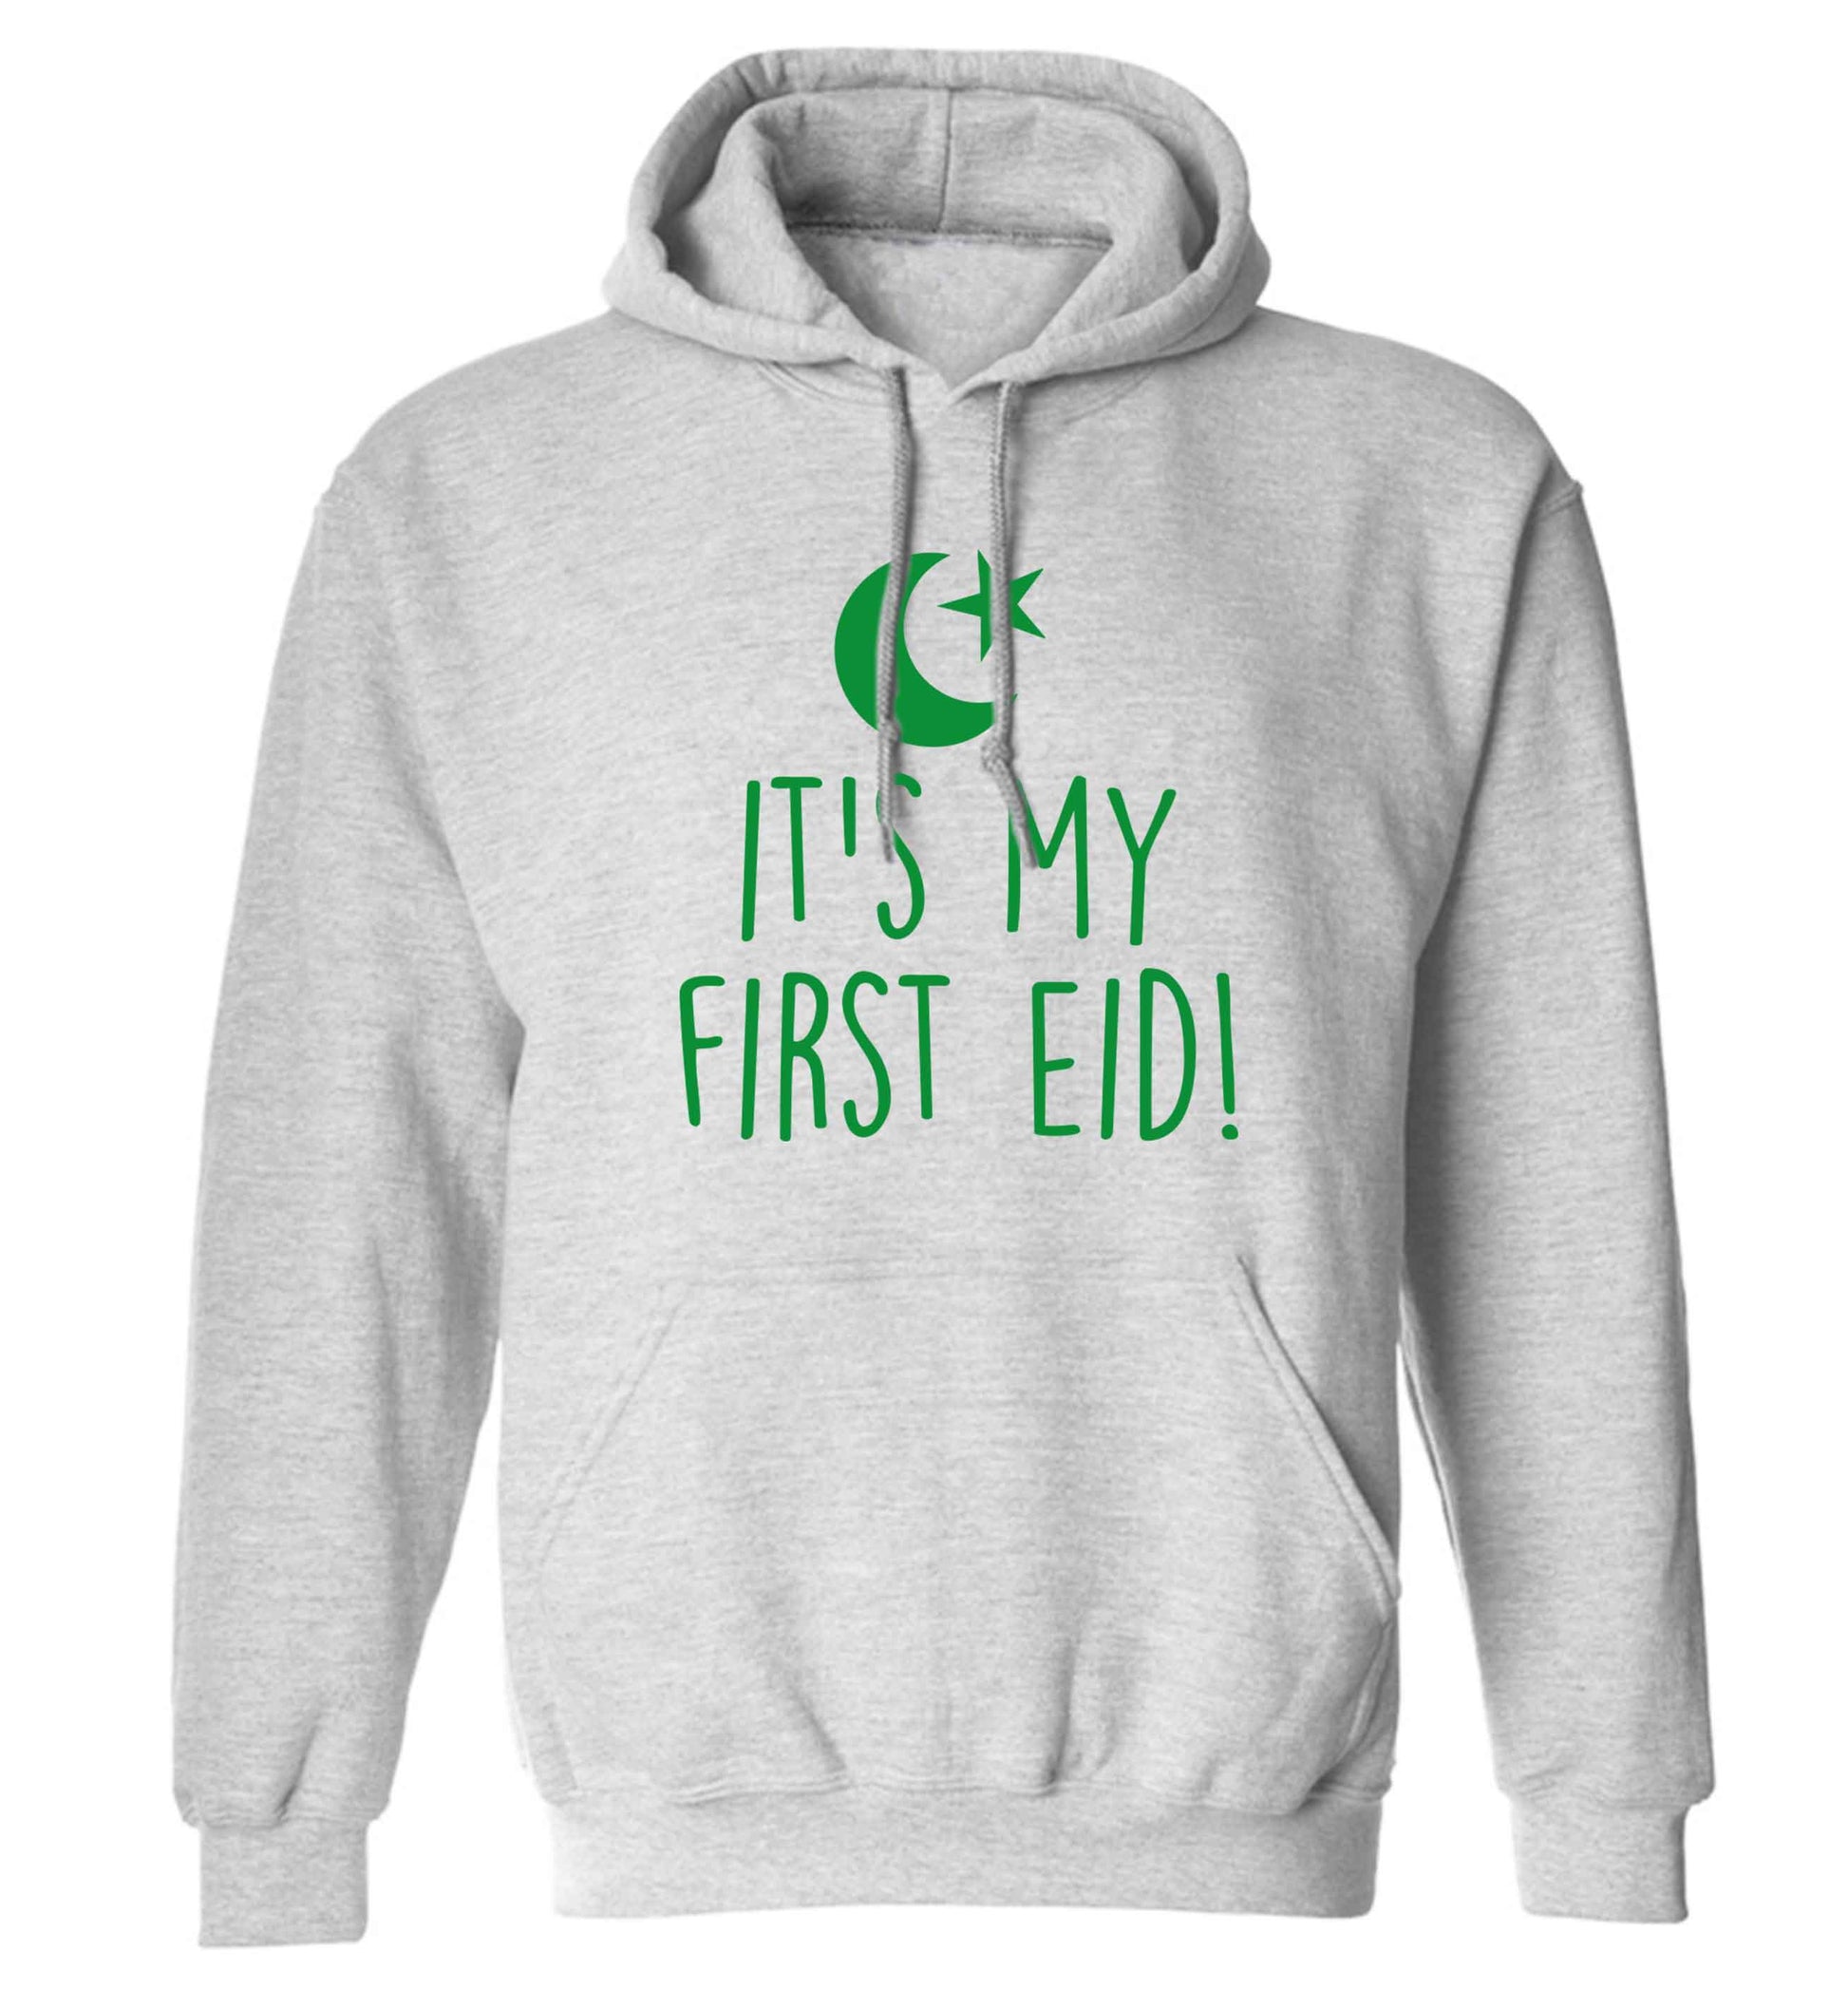 It's my first Eid adults unisex grey hoodie 2XL